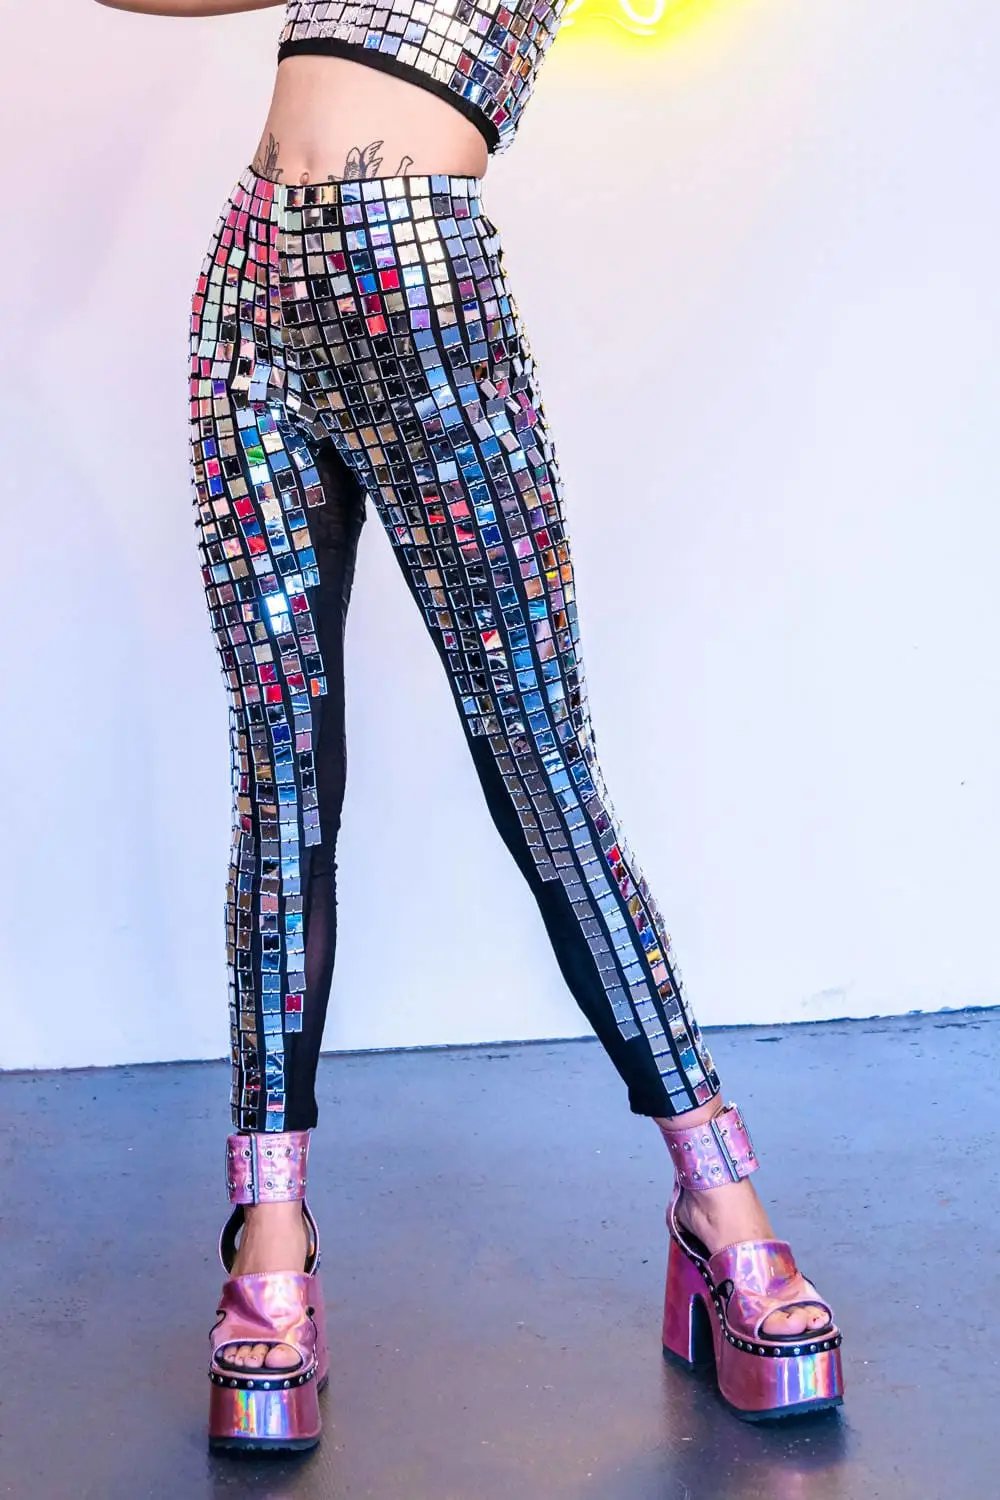 NWT Kate Spade Women's Glitter Front Legging Black & Silver Shimmer Sz S/M  & M/L